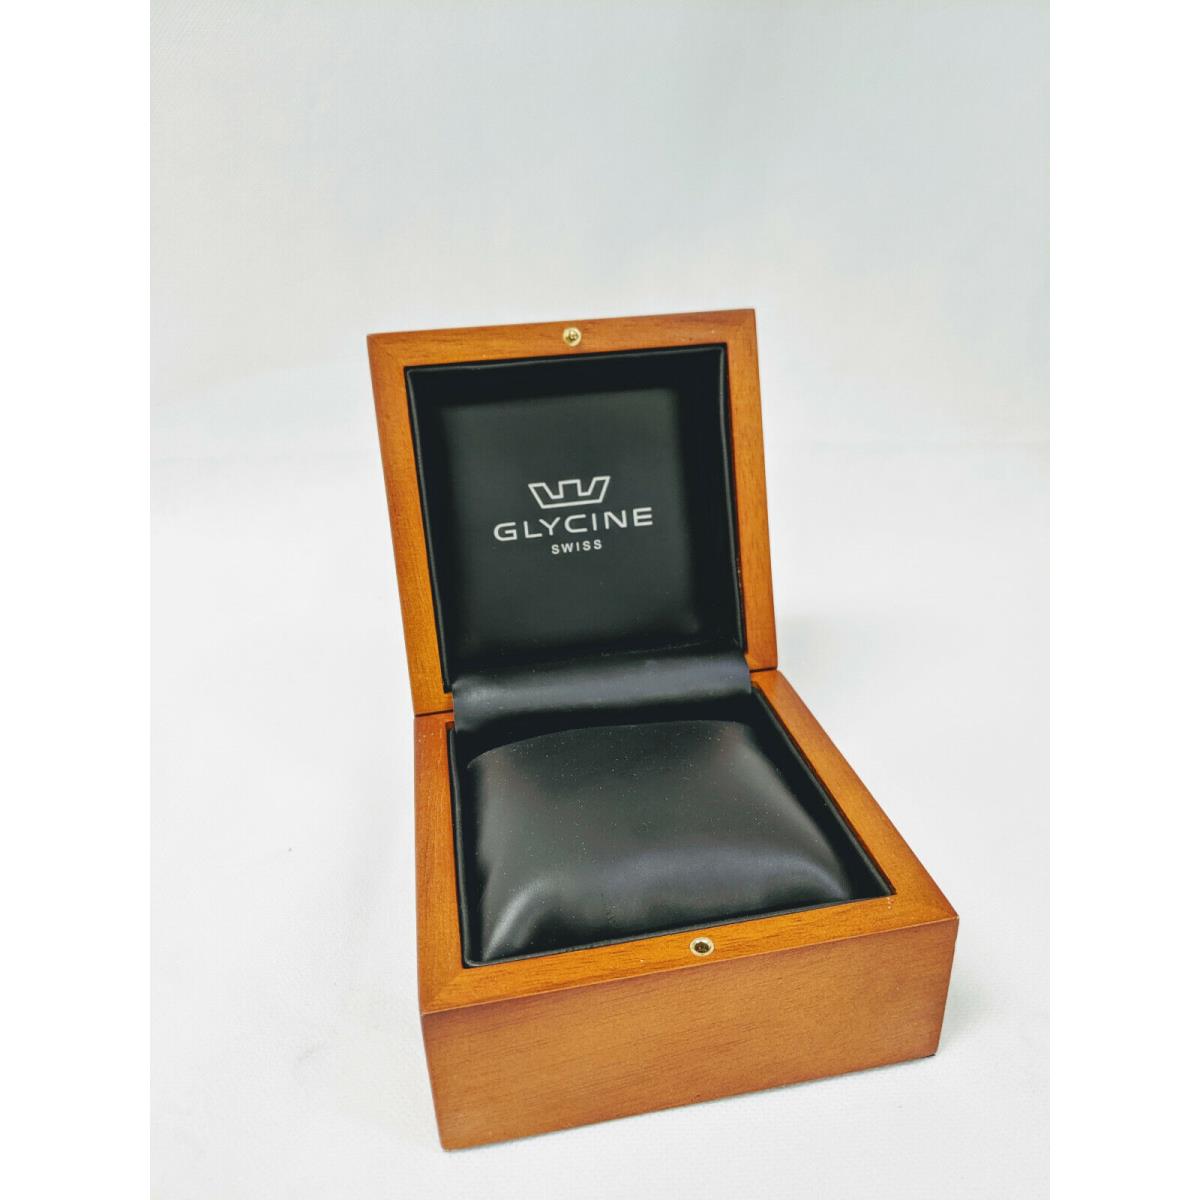 Glycine Watch Box Small Wood 4.5 x 4.5 x 3.5 Inches